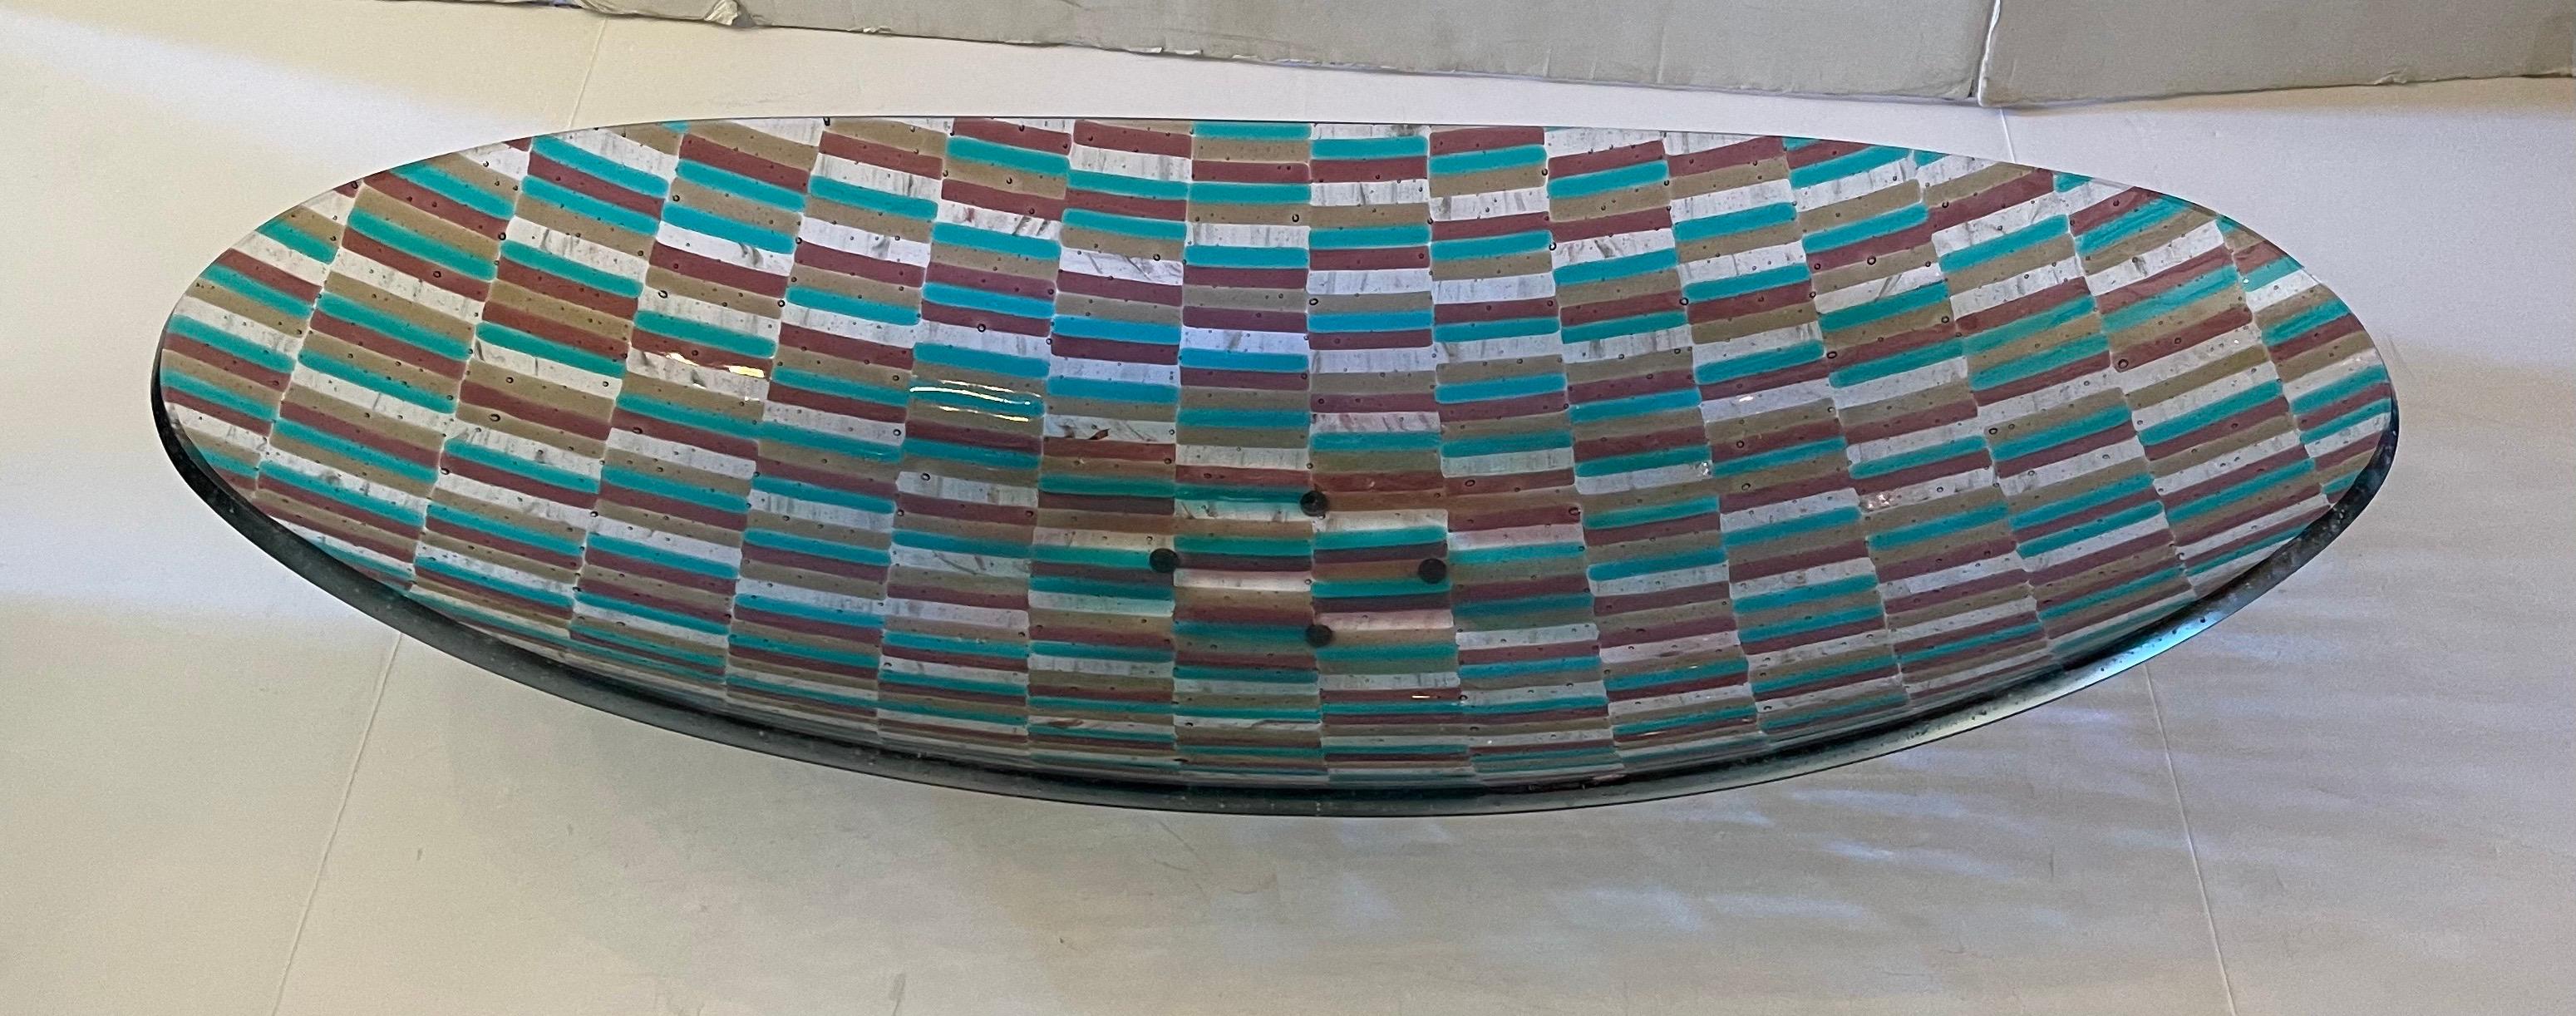 Un merveilleux centre de table Lorin Marsh en verre d'art de Murano, moderne contemporain et allongé
Mesures : 28